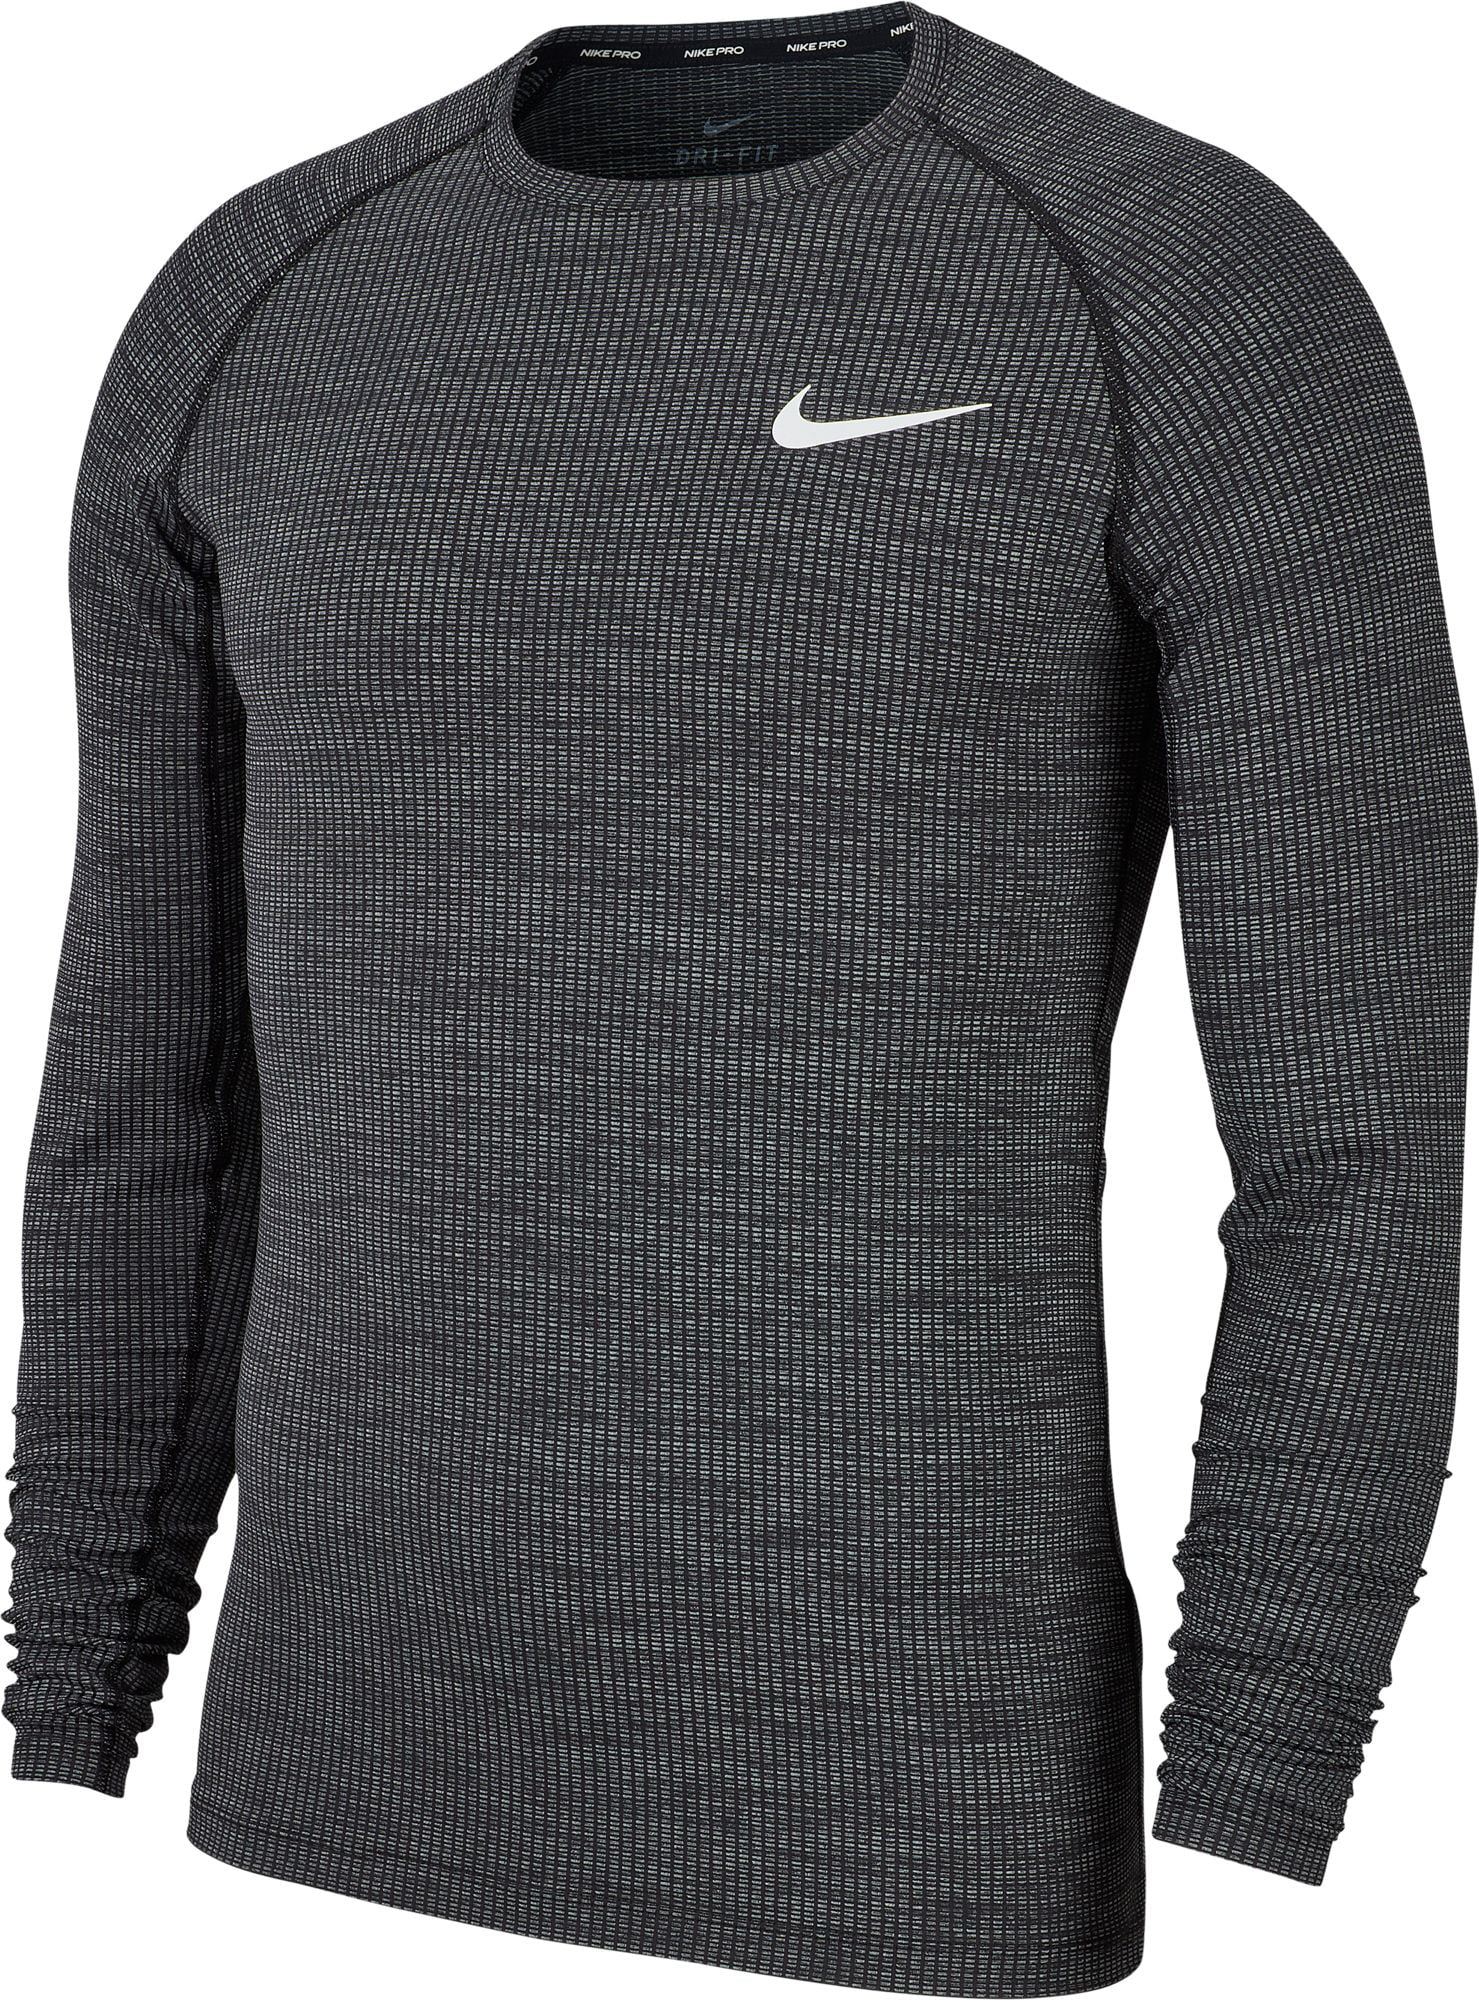 Nike - Nike Men's Pro Fitted Long Sleeve Shirt - Walmart.com - Walmart.com